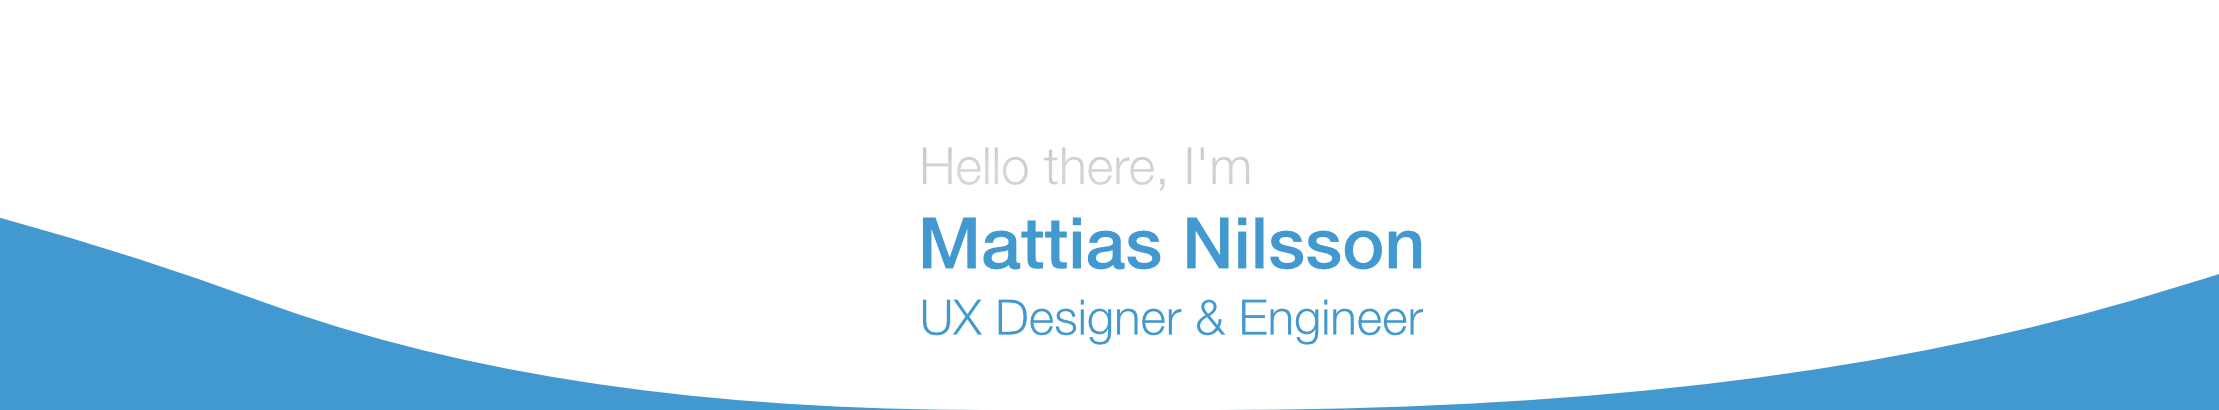 Mattias Nilsson's profile banner